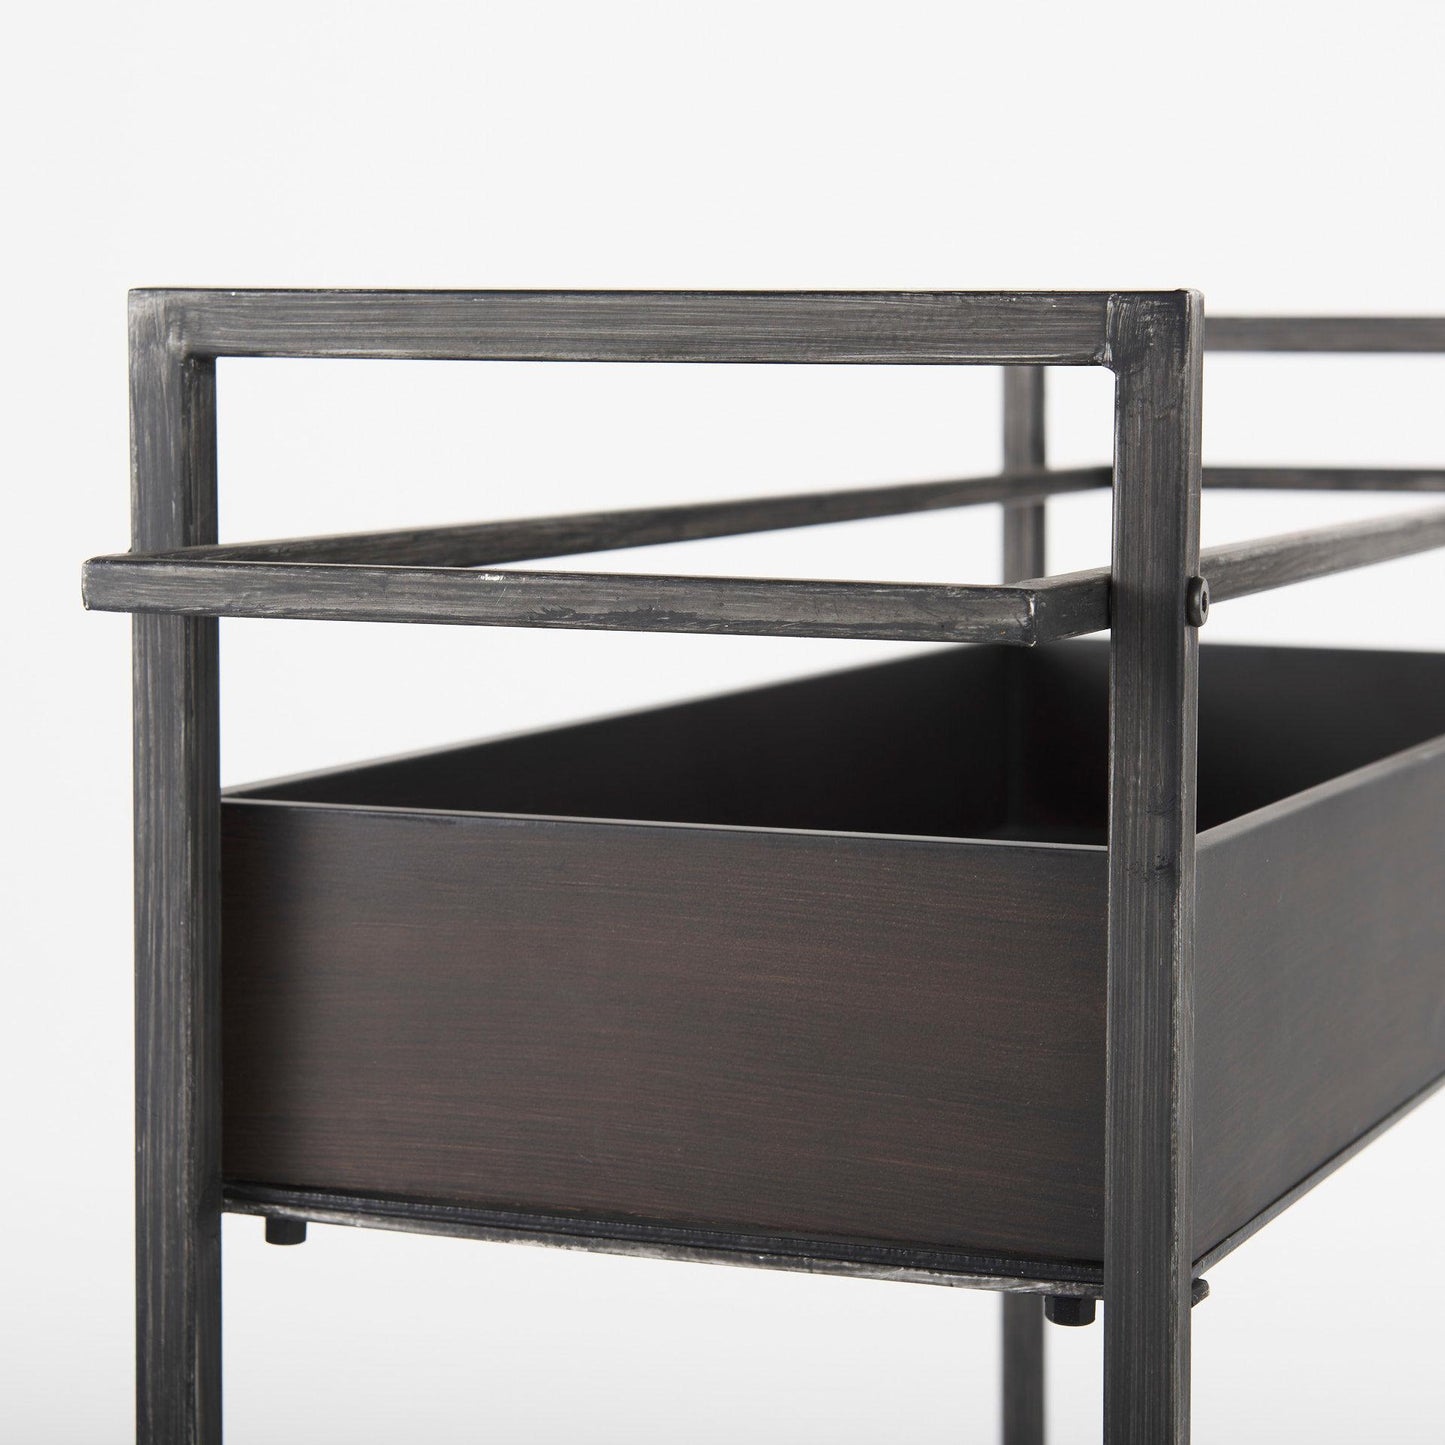 Masataka Metal Frame Two-Tier with Metal Shelves Rectangular Bar Cart